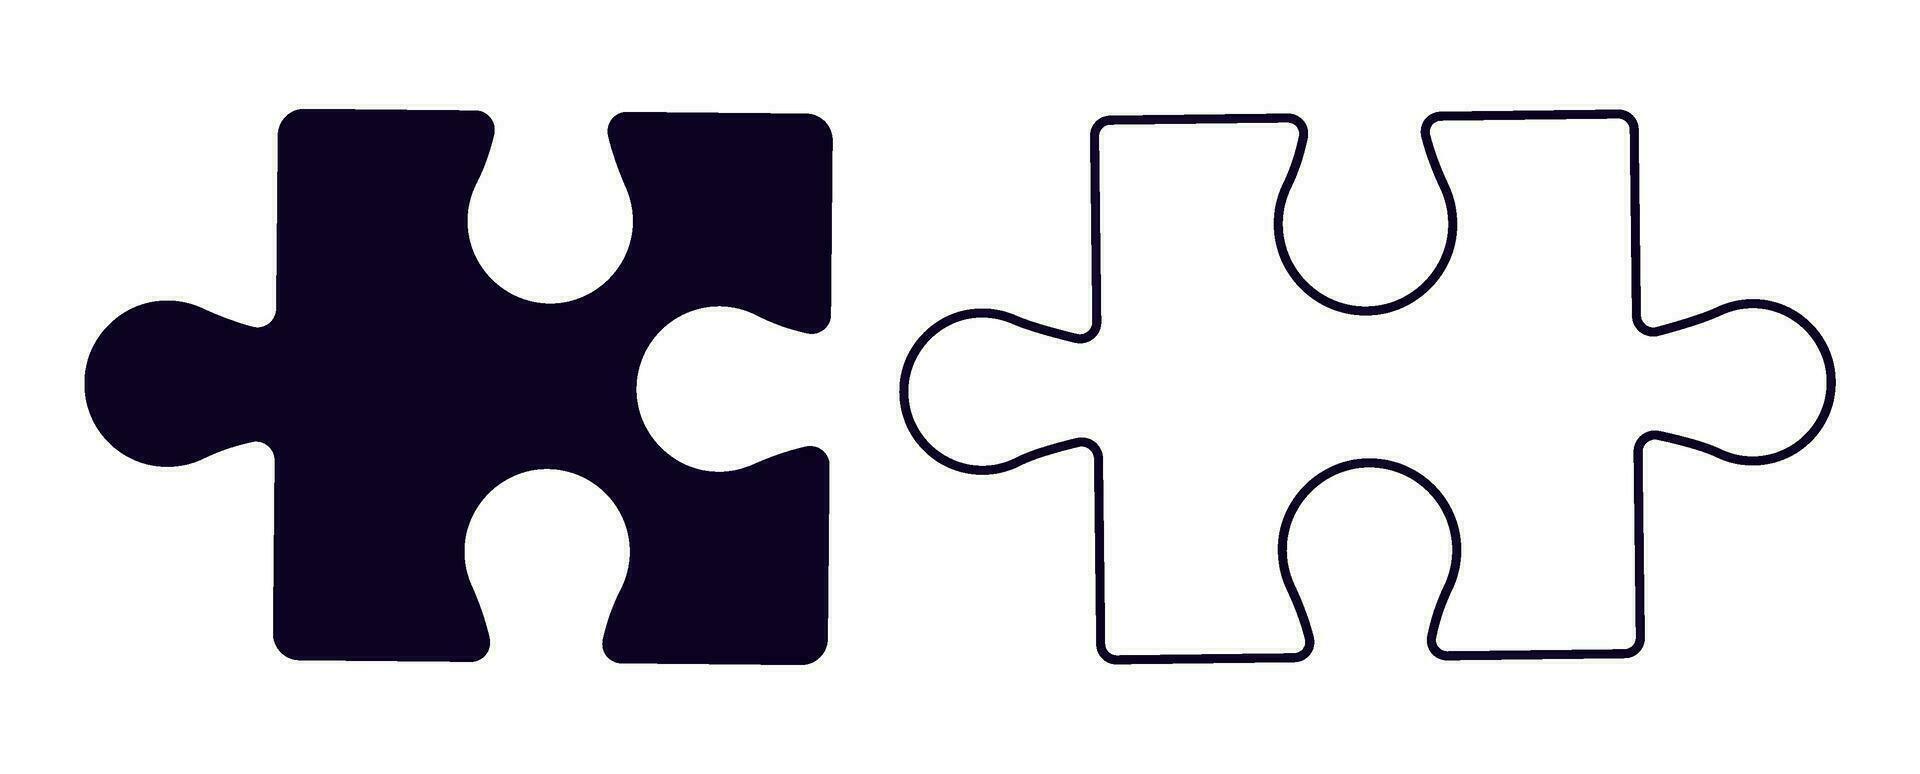 dos sencillo vector rompecabezas piezas. negro y blanco aislado rompecabezas juego rompecabezas